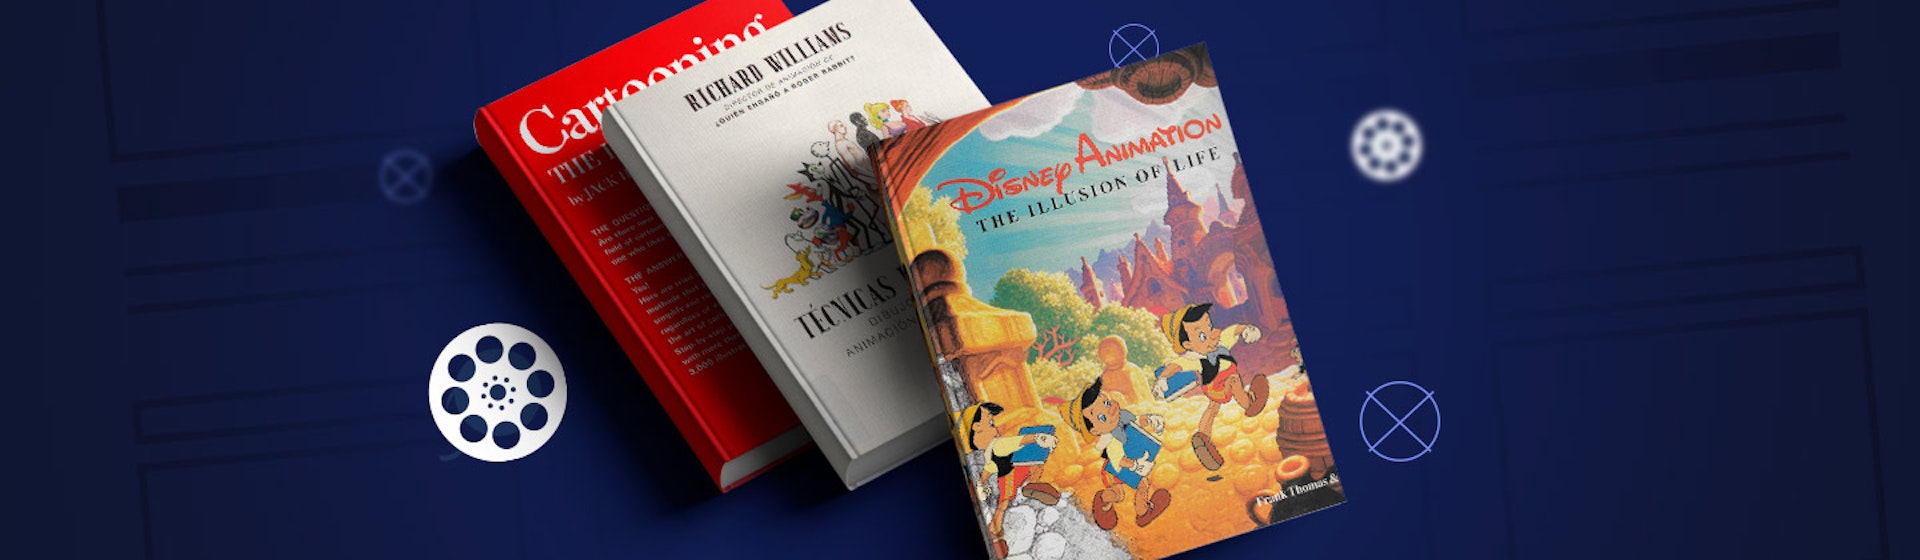 20 libros de animación para aprender a animar de forma profesional